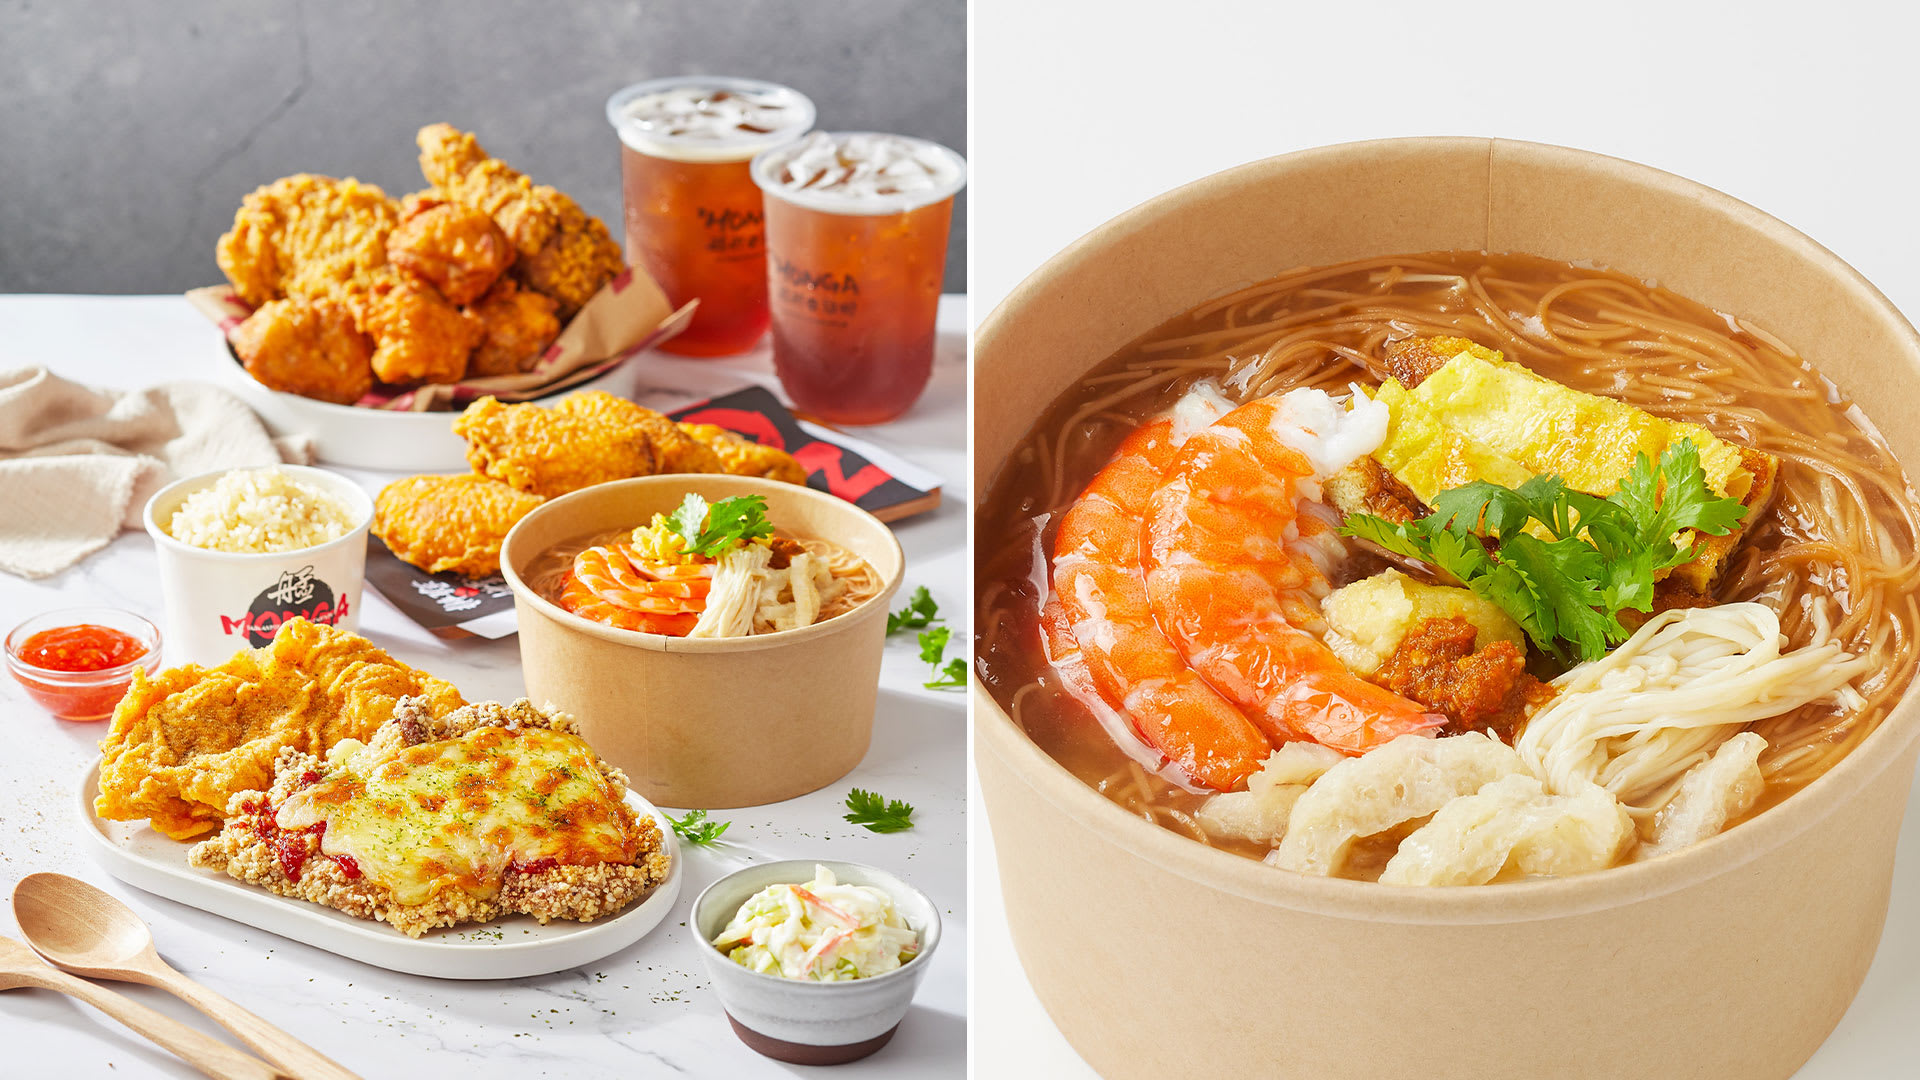 Monga S’pore Launching Taiwanese Night Market-Style Prawn Mee Sua With Fish Maw